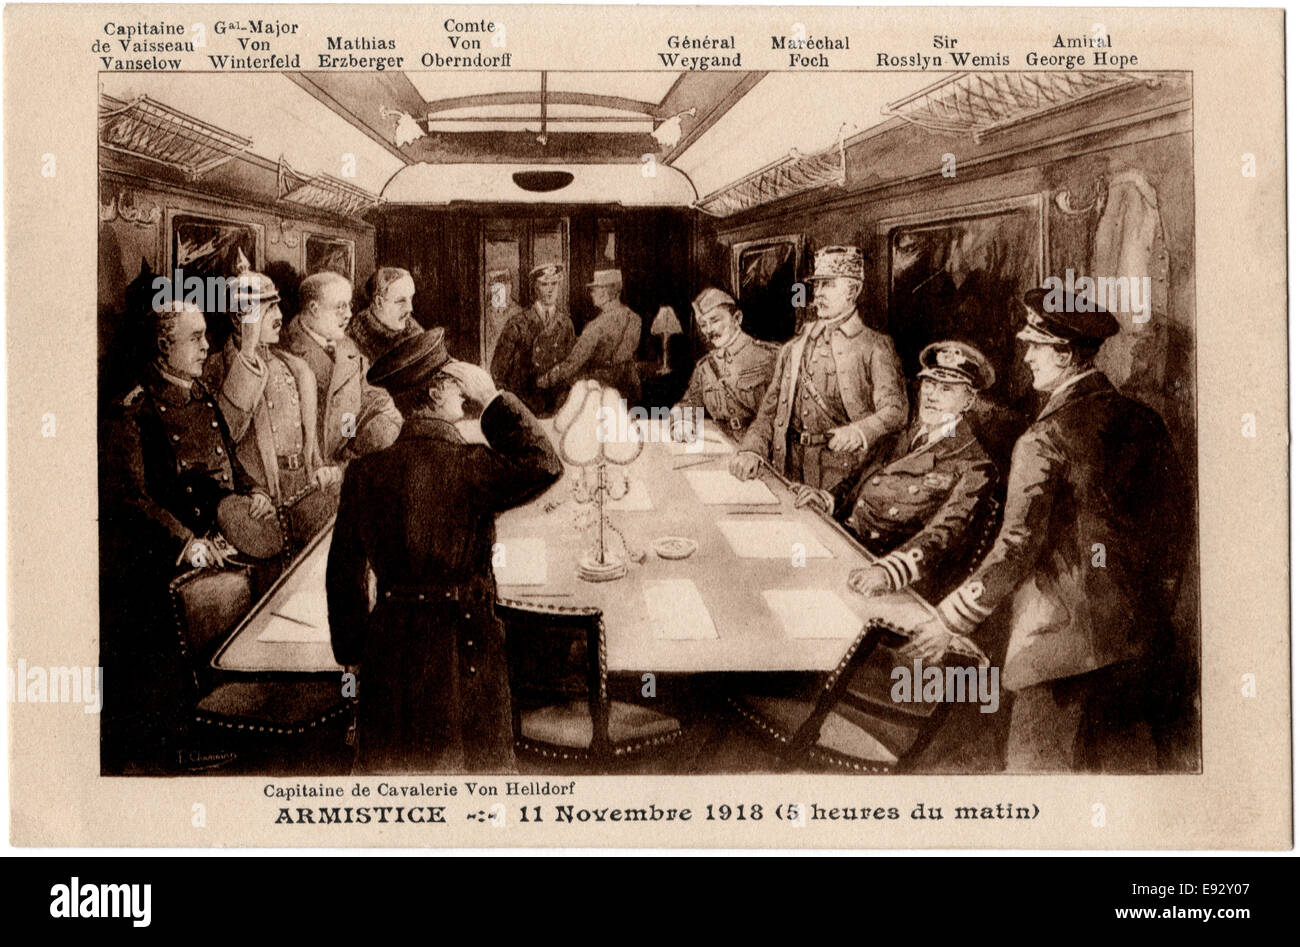 Armistice with Germany Ending World War I, Compiegne, France, November 11, 1918, Postcard Stock Photo